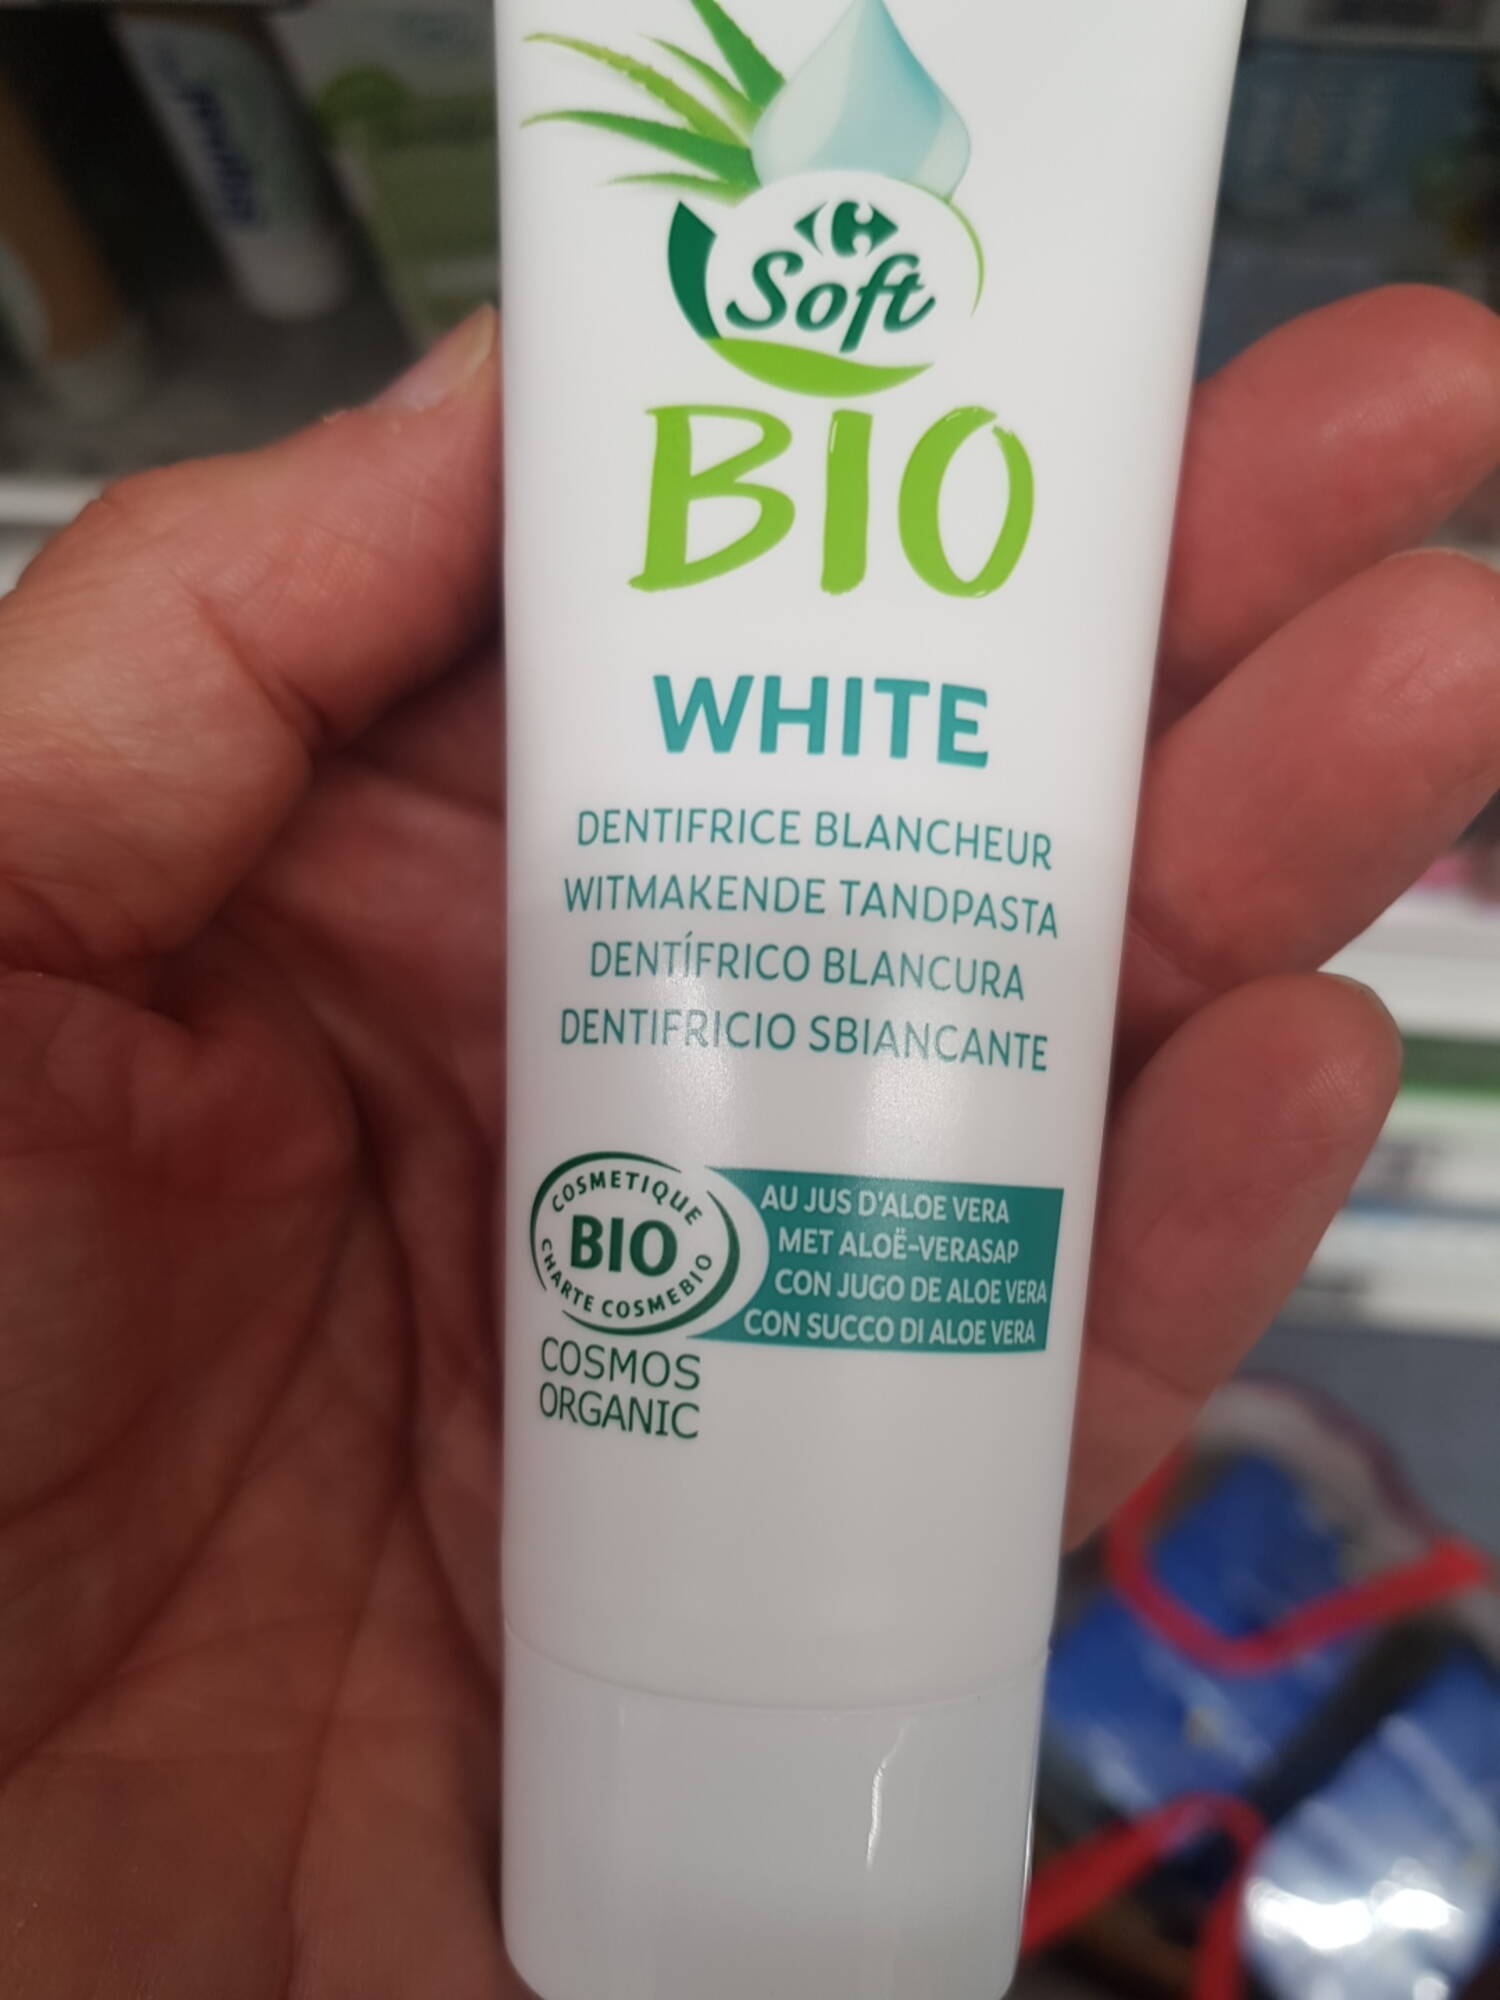 CARREFOUR SOFT - Bio white - Dentifrice blancheur bio